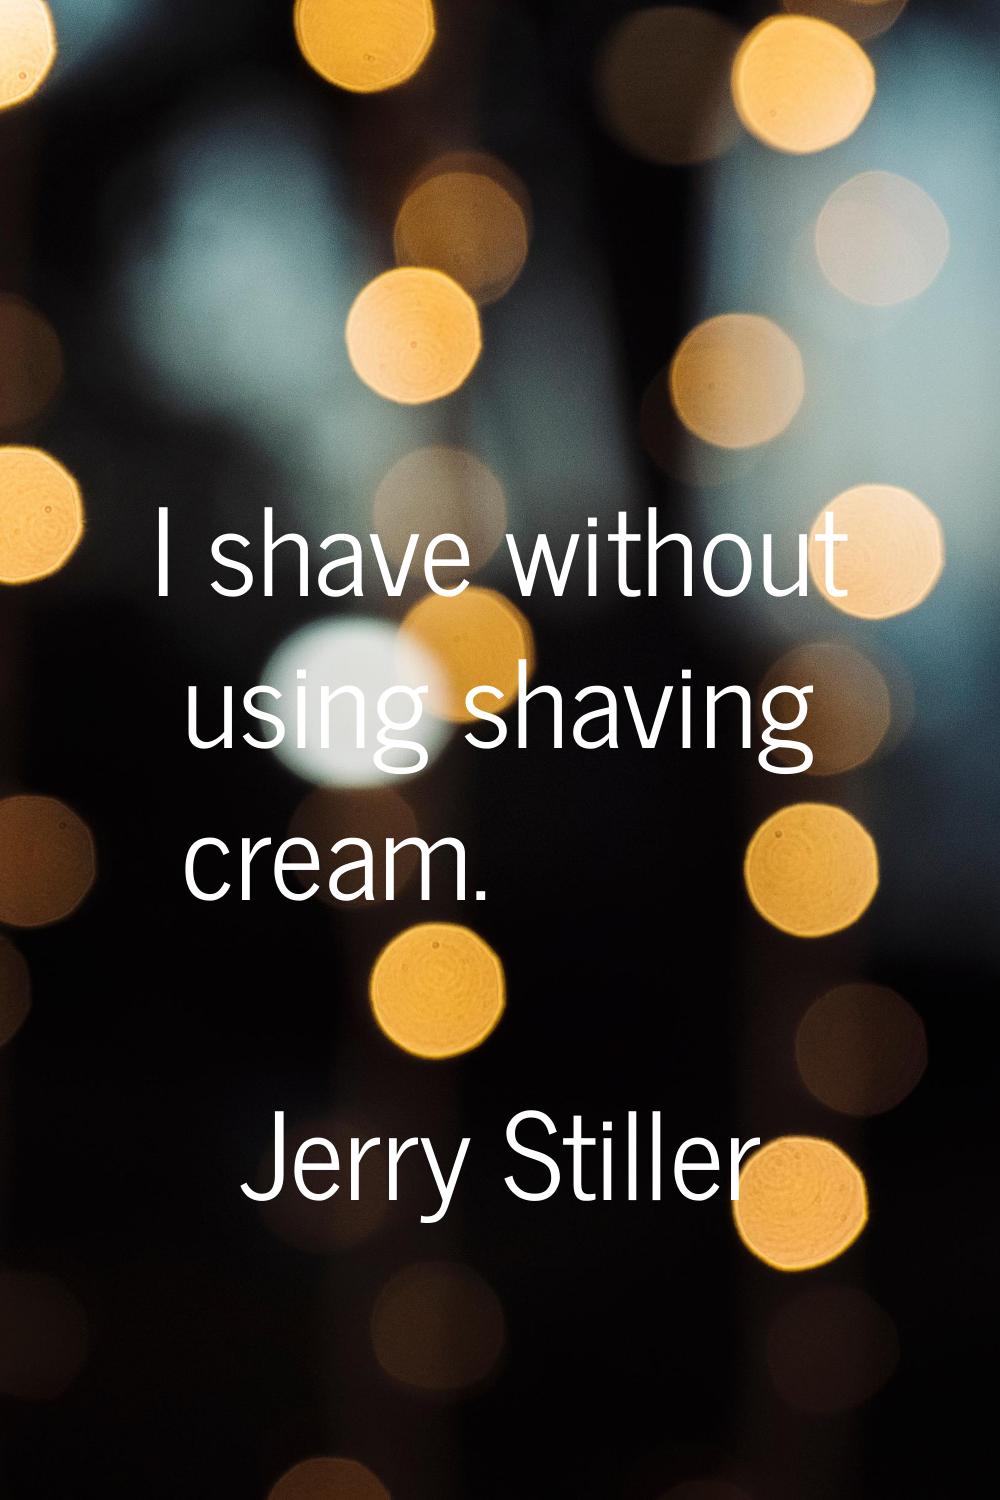 I shave without using shaving cream.